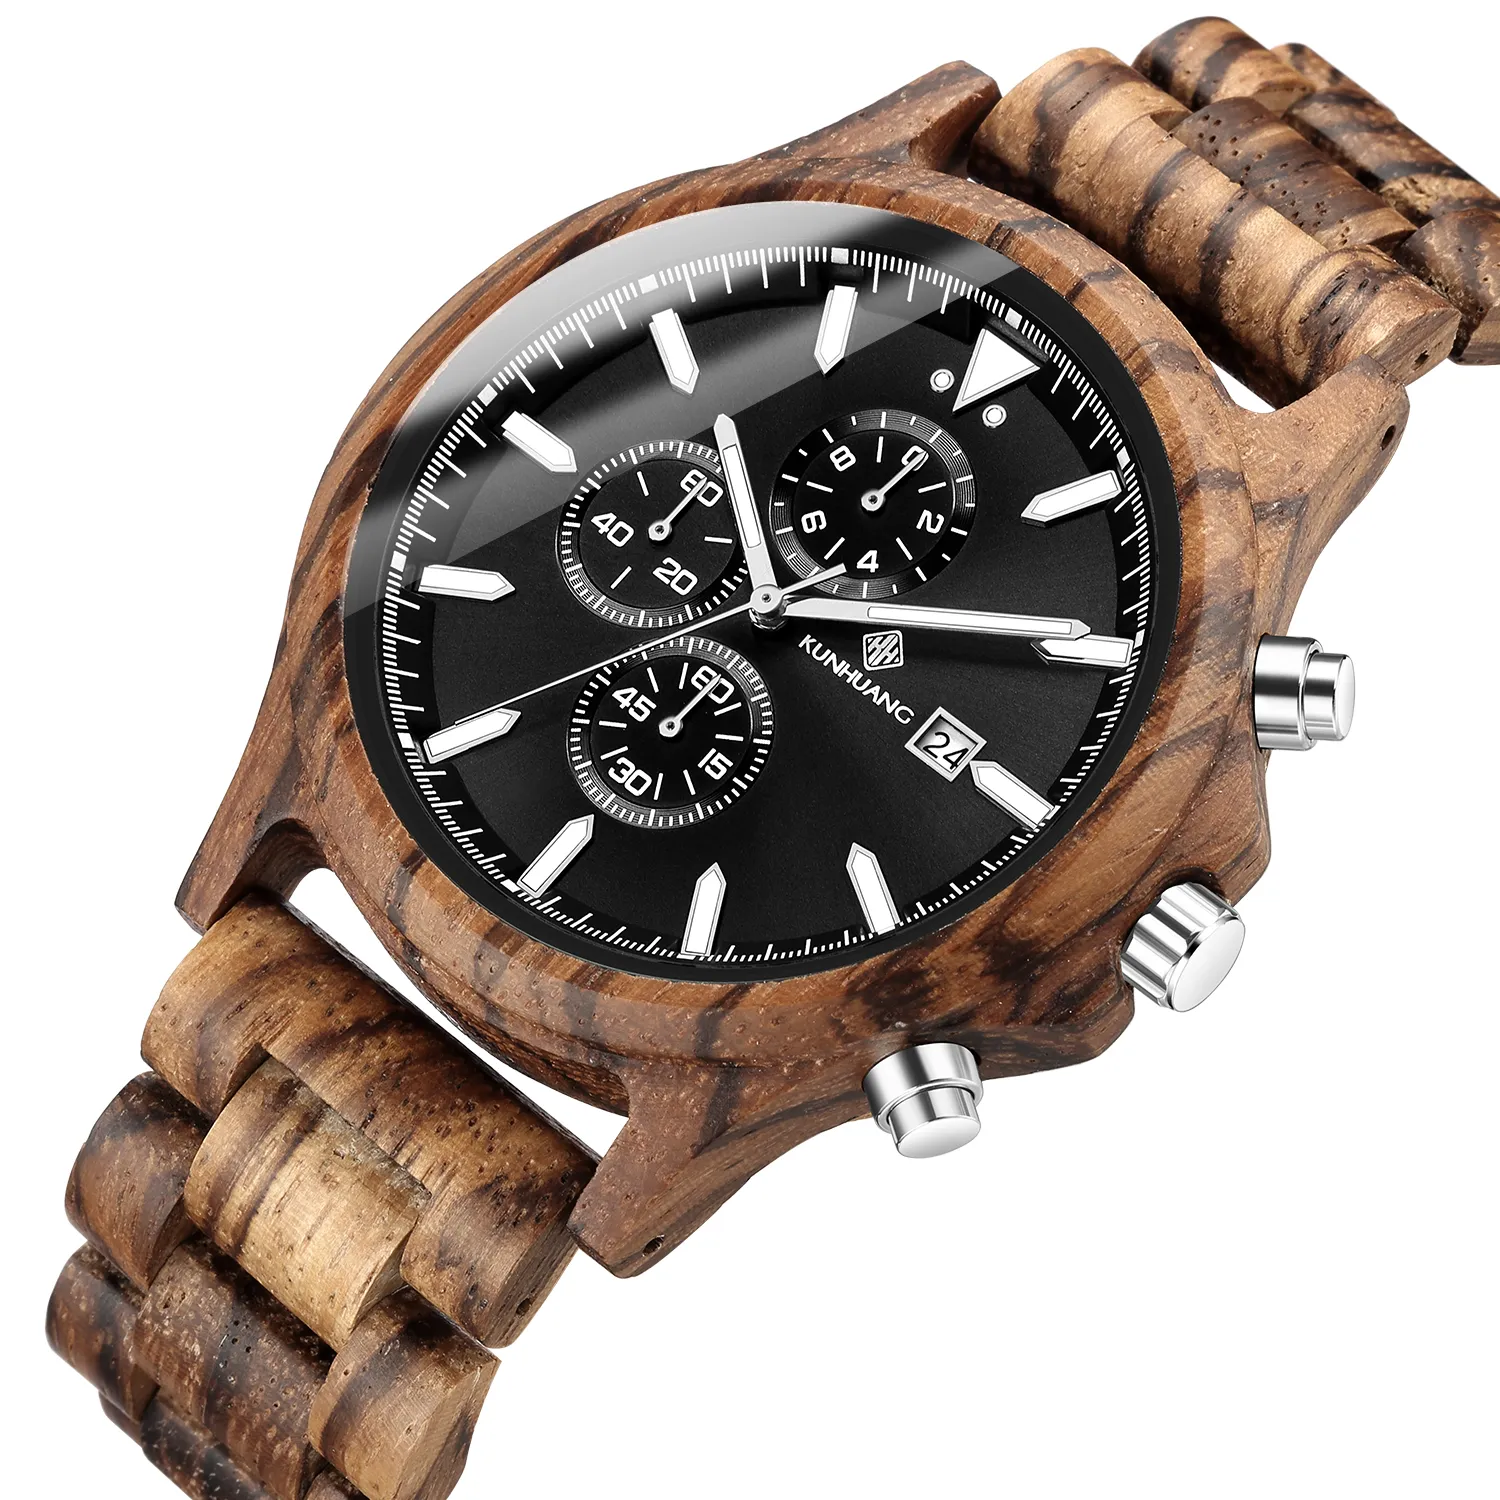 Hommes Wood Watch Chronograph Luxury Military Sport Watches Eleby Casual personnalisée en bois personnalisé Watches 229Z